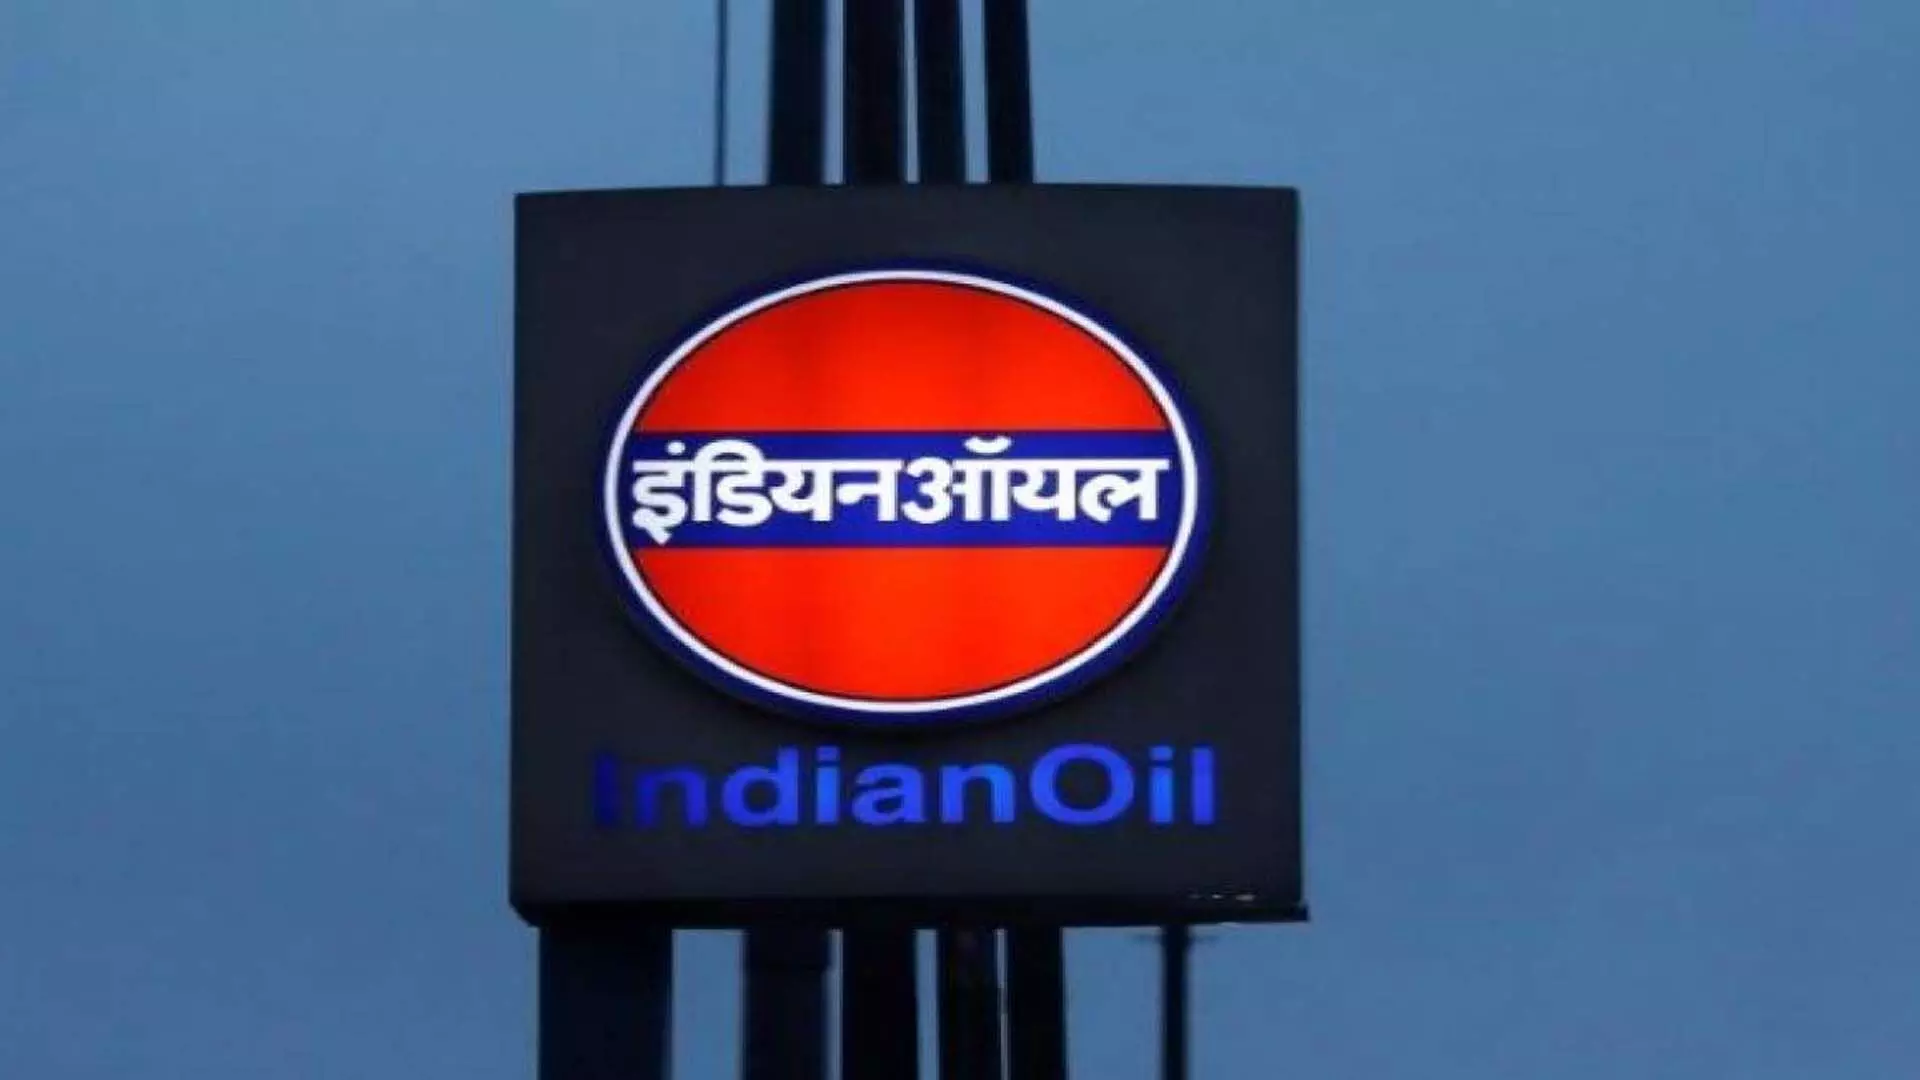 Indian Oils पहली तिमाही का शुद्ध लाभ 75 प्रतिशत घटकर 3,722 करोड़ रुपये रहा